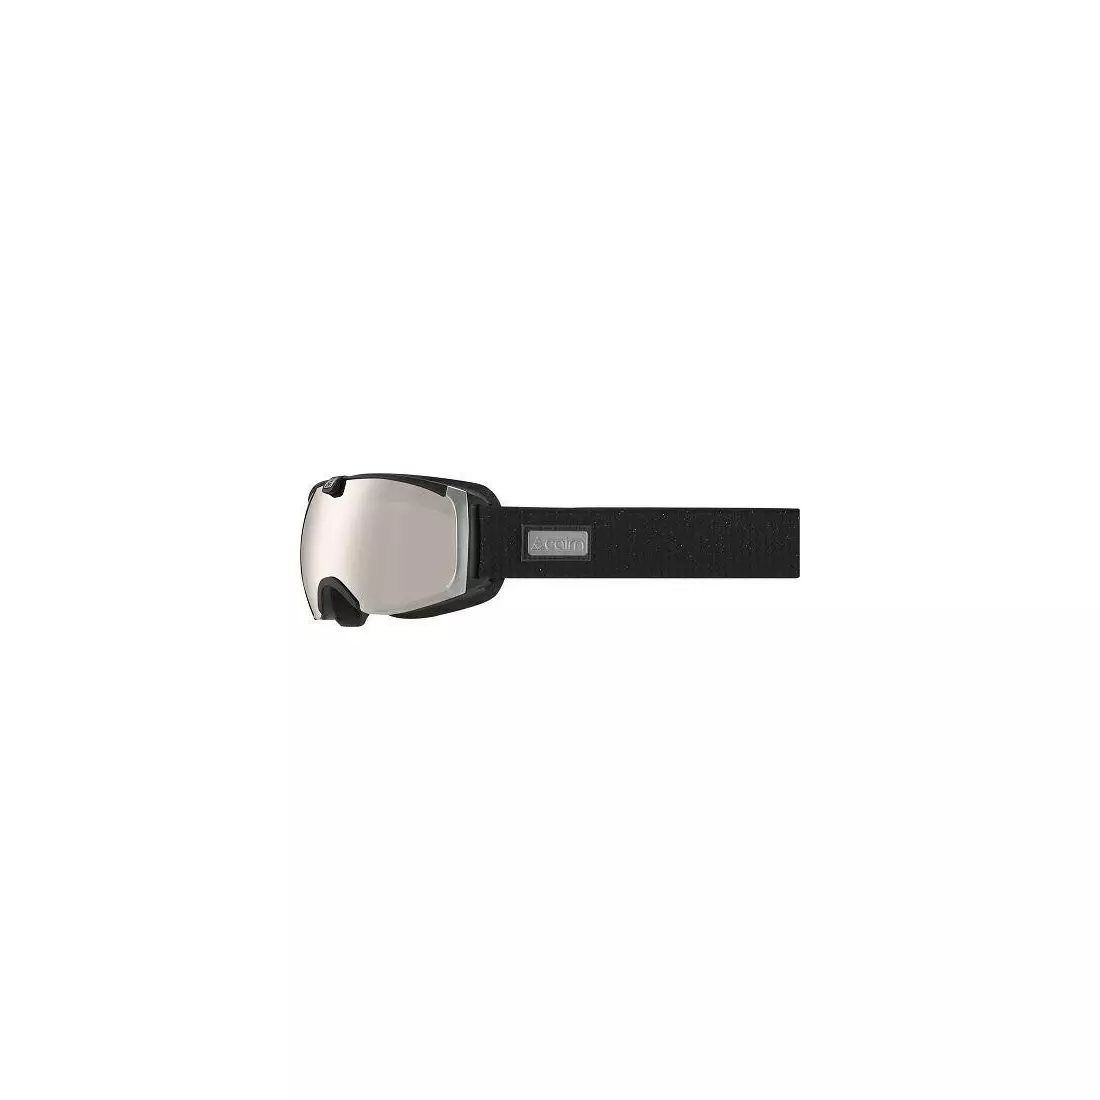 CAIRN ski / snowboard goggles PEARL SPX3000 mat black silver